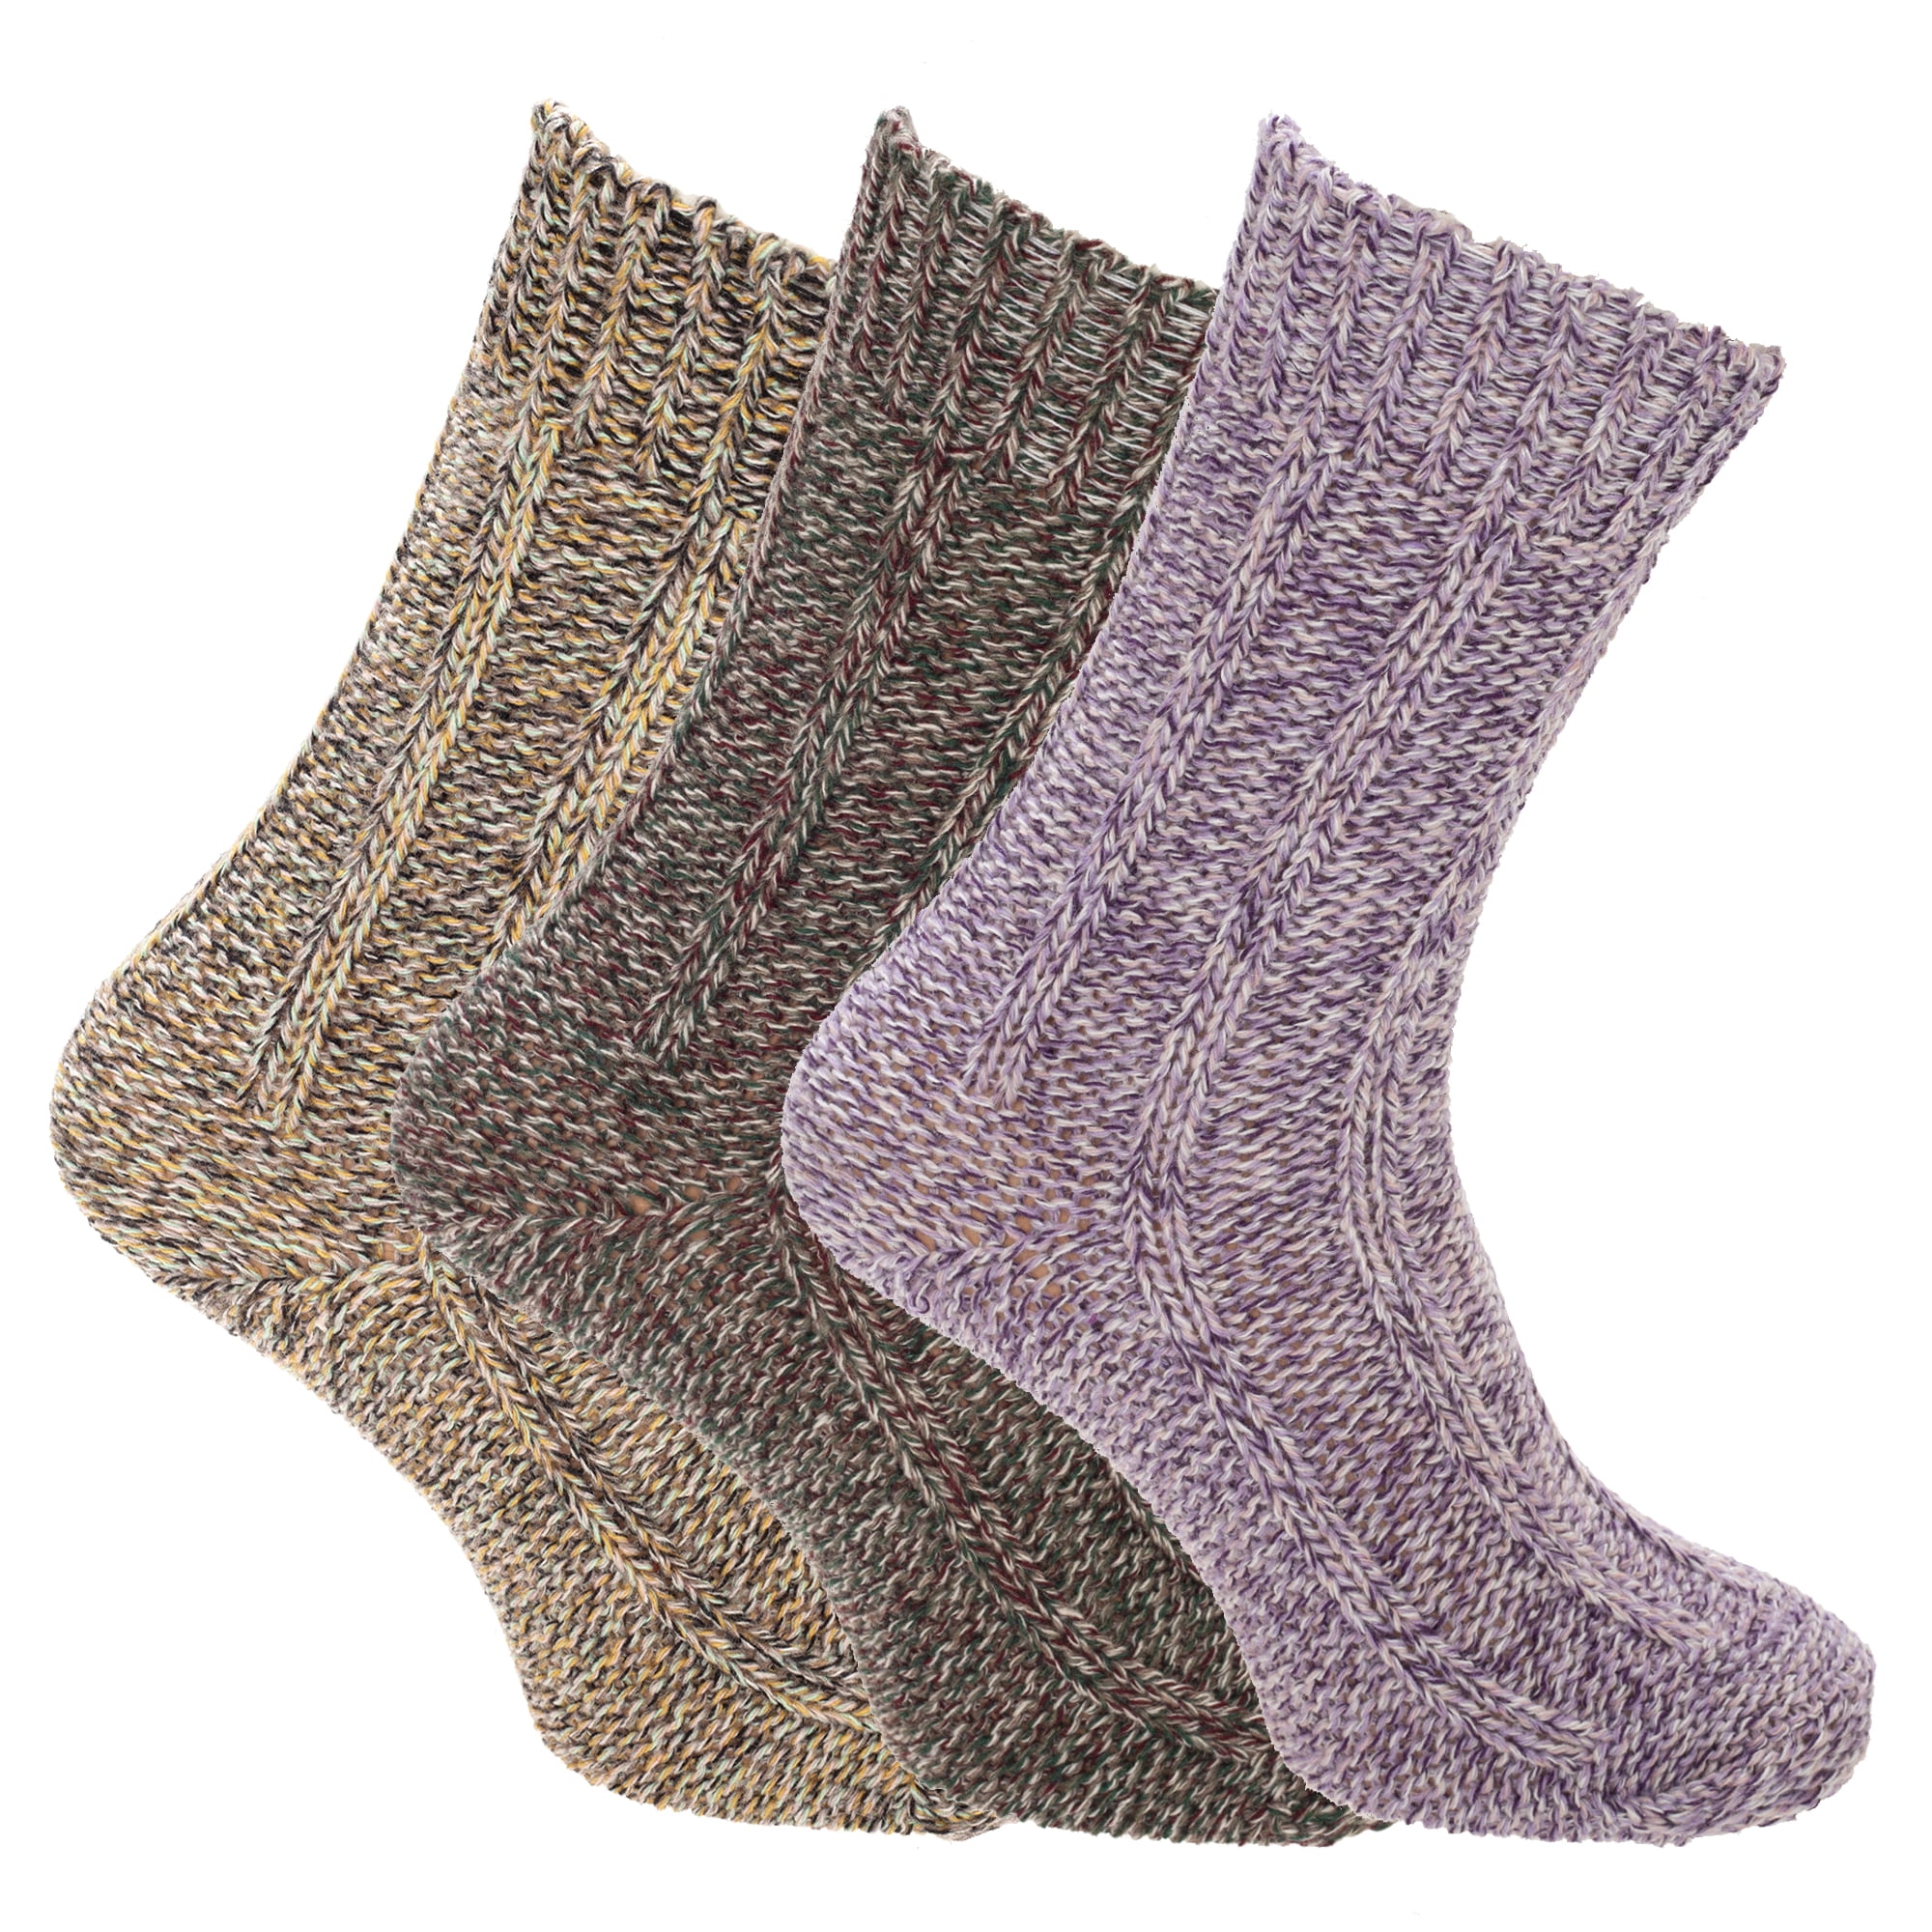 2 Pairs Multicolour for Women Socks Grape Wine/Oatmeal 6/9 UK Sizes 6-9 Trespass Hadley